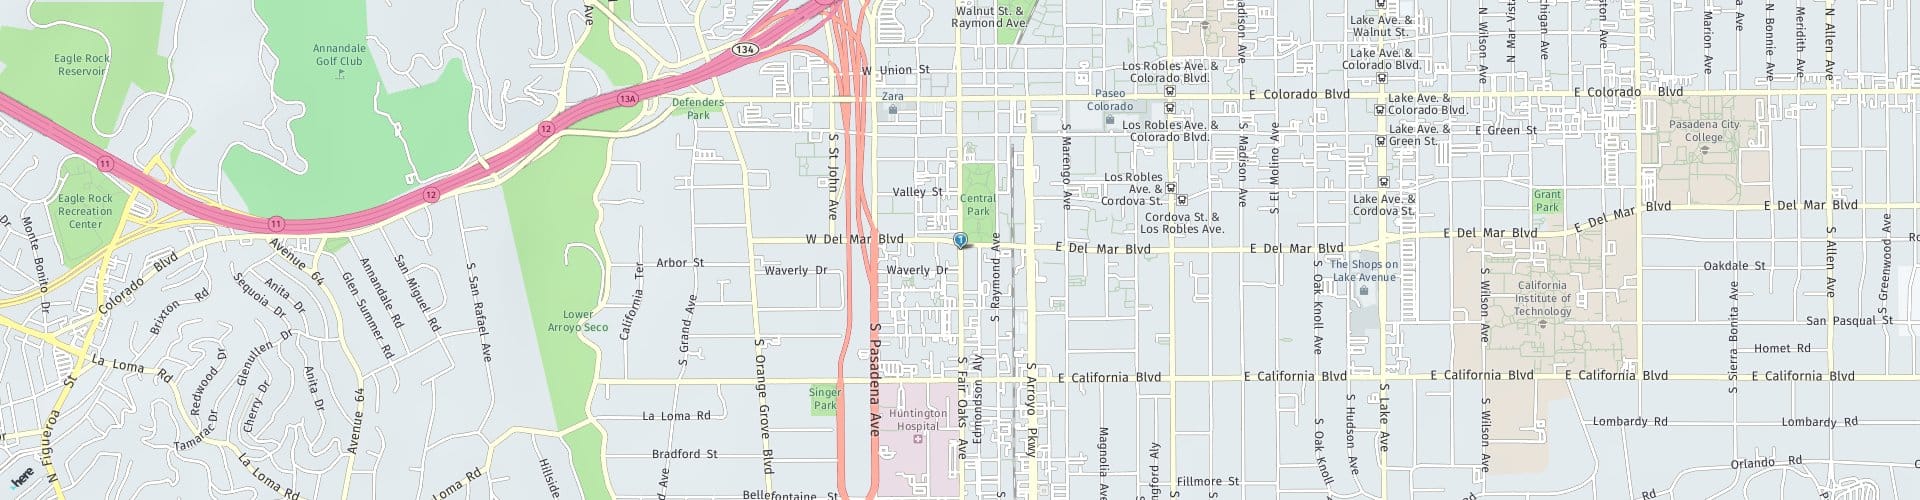 Location Map: 301 S Fair Oaks Ave. Pasadena, CA 91105